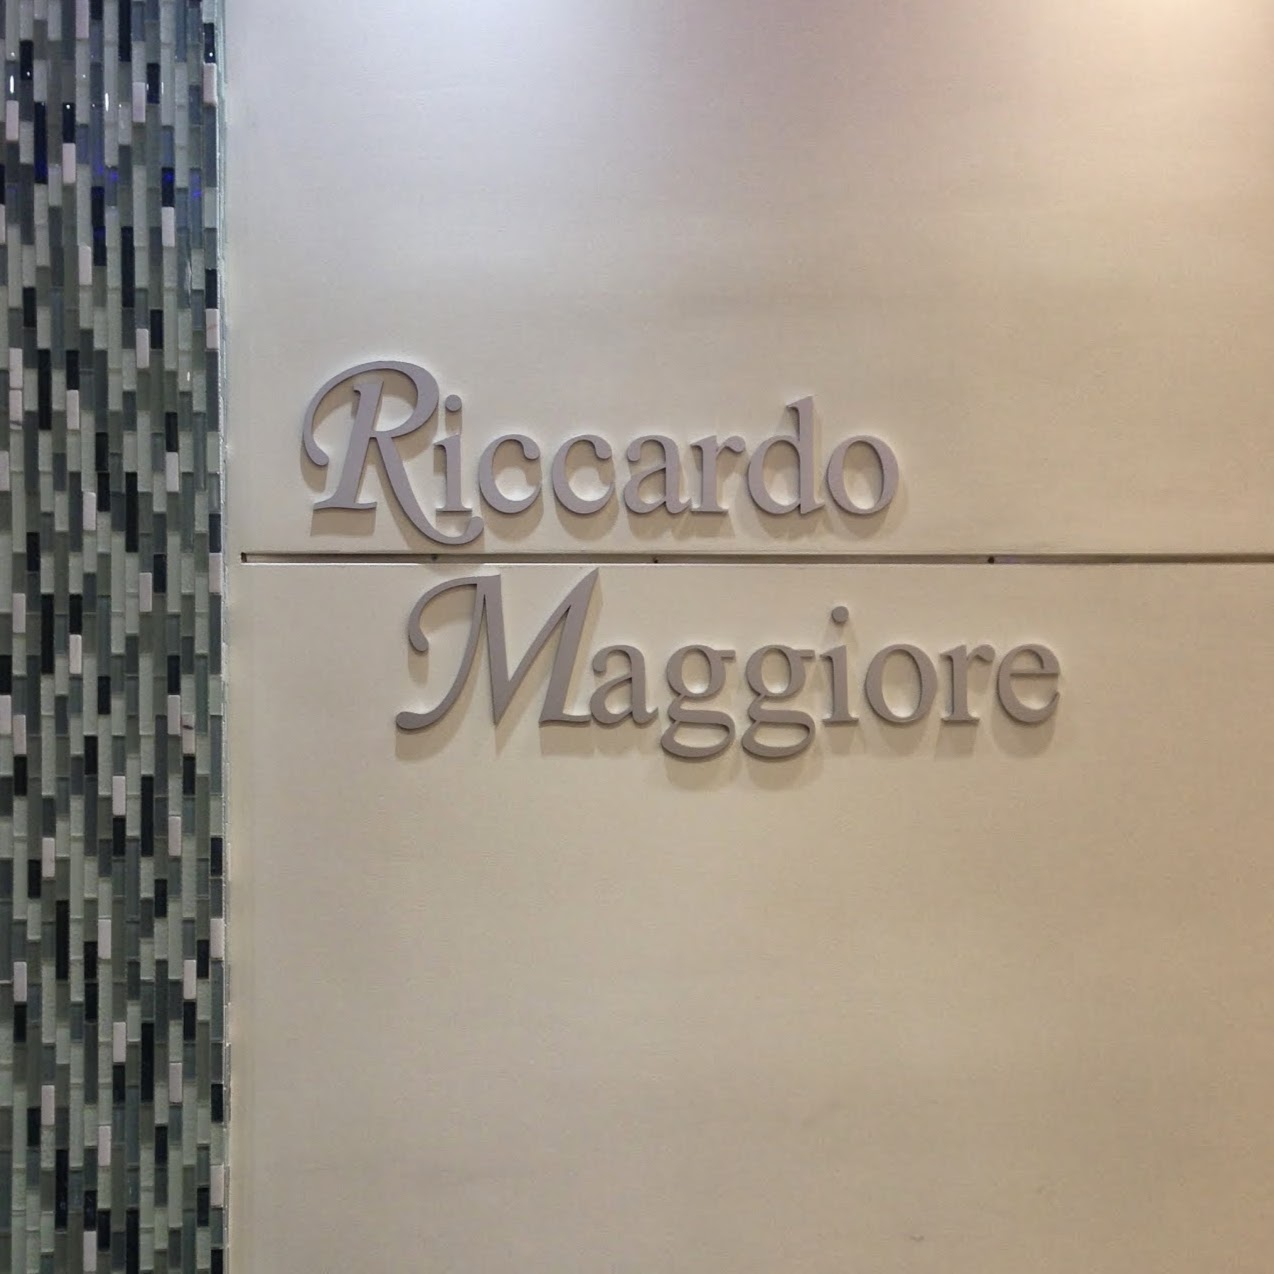 Photo of Riccardo Maggiore Salon - Flatiron in New York City, New York, United States - 3 Picture of Point of interest, Establishment, Hair care